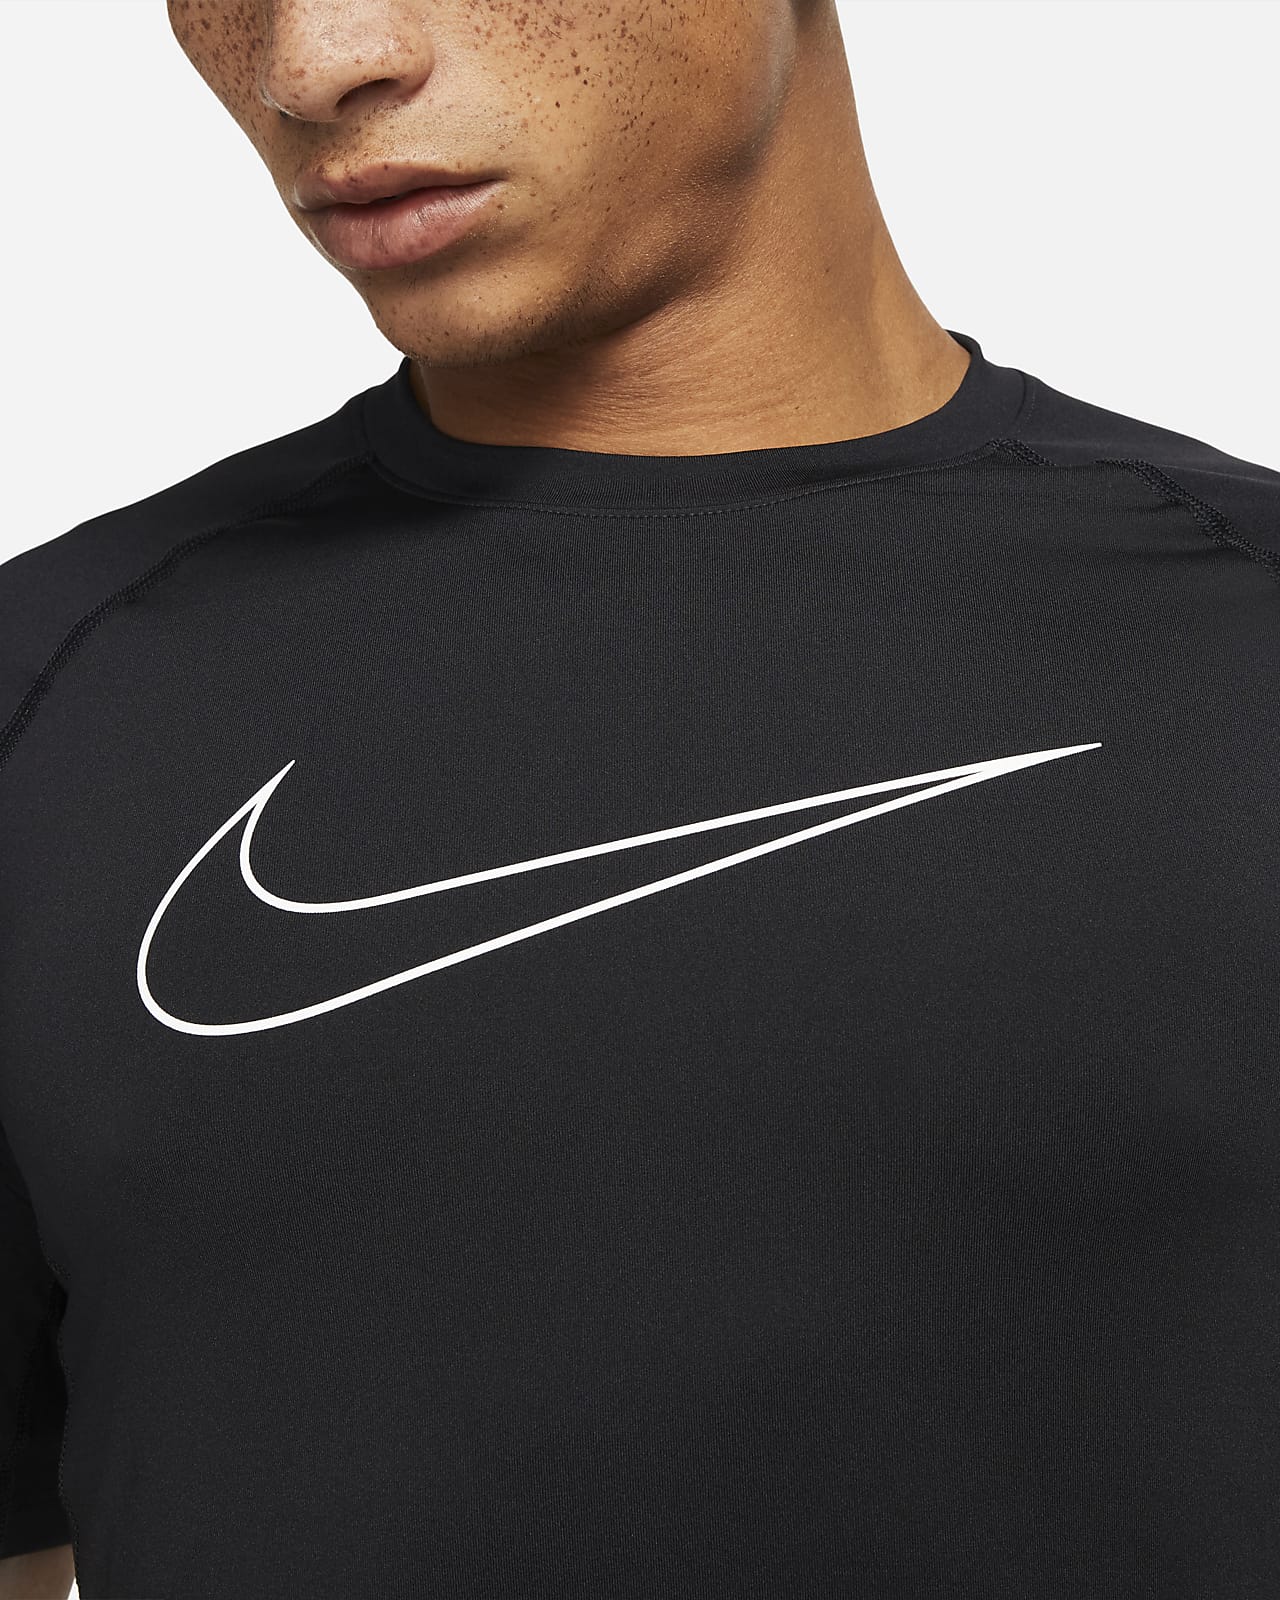 Nike Pro Men's Dri-FIT Slim Fit Long-Sleeve Top